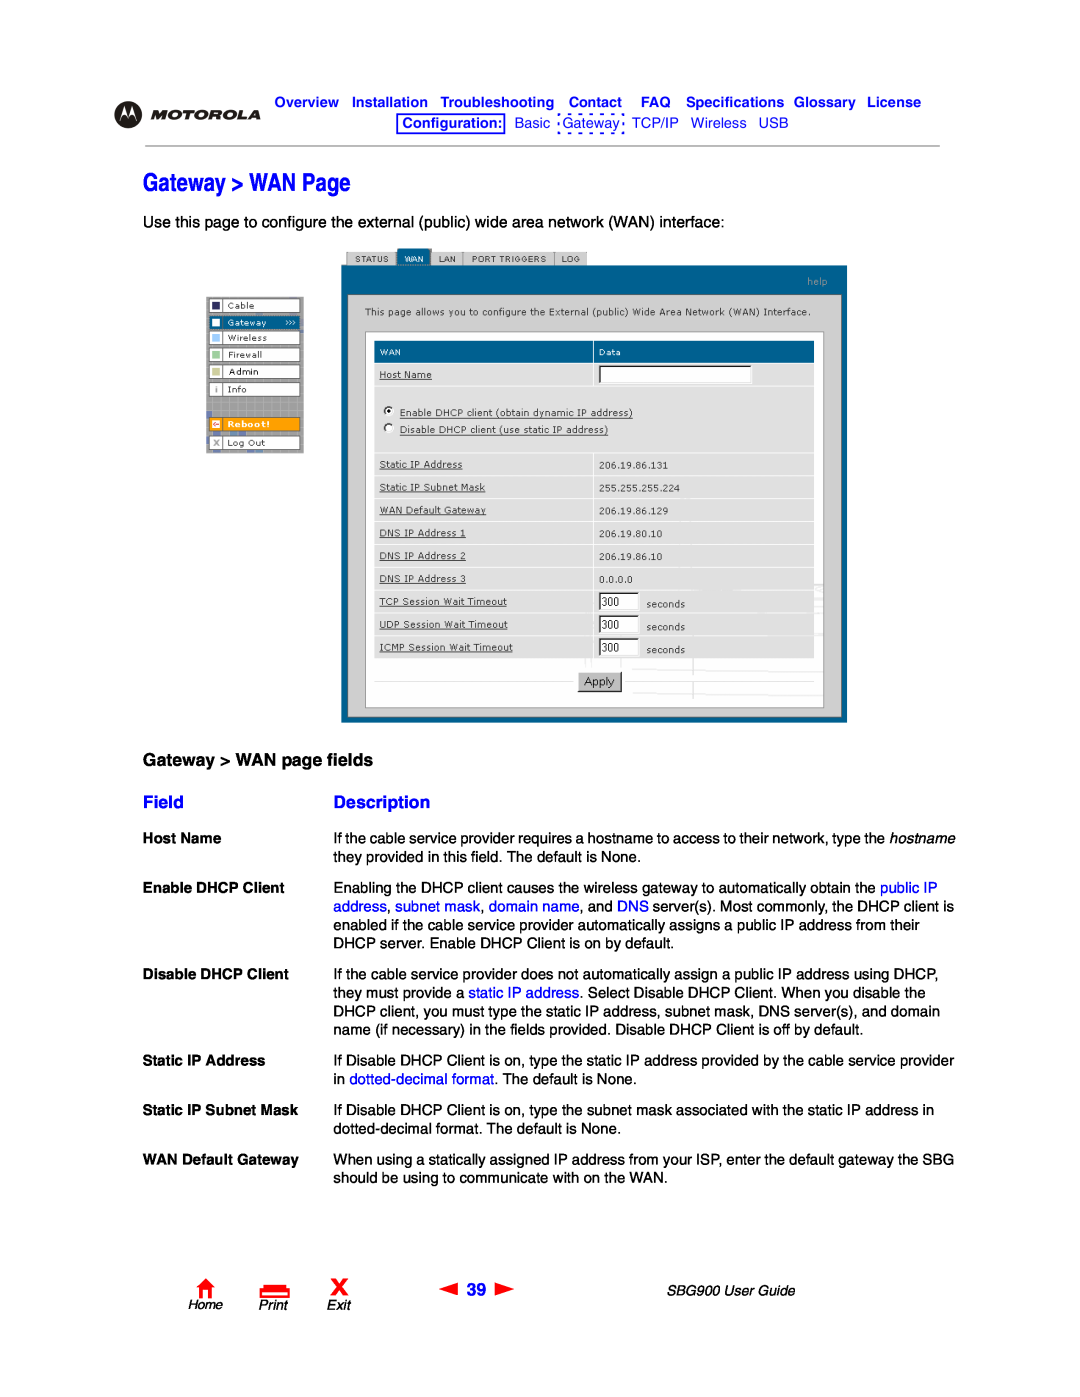 Motorola SBG900 manual Gateway WAN Page, Gateway WAN page fields, Field, Description, Home Print Exit 